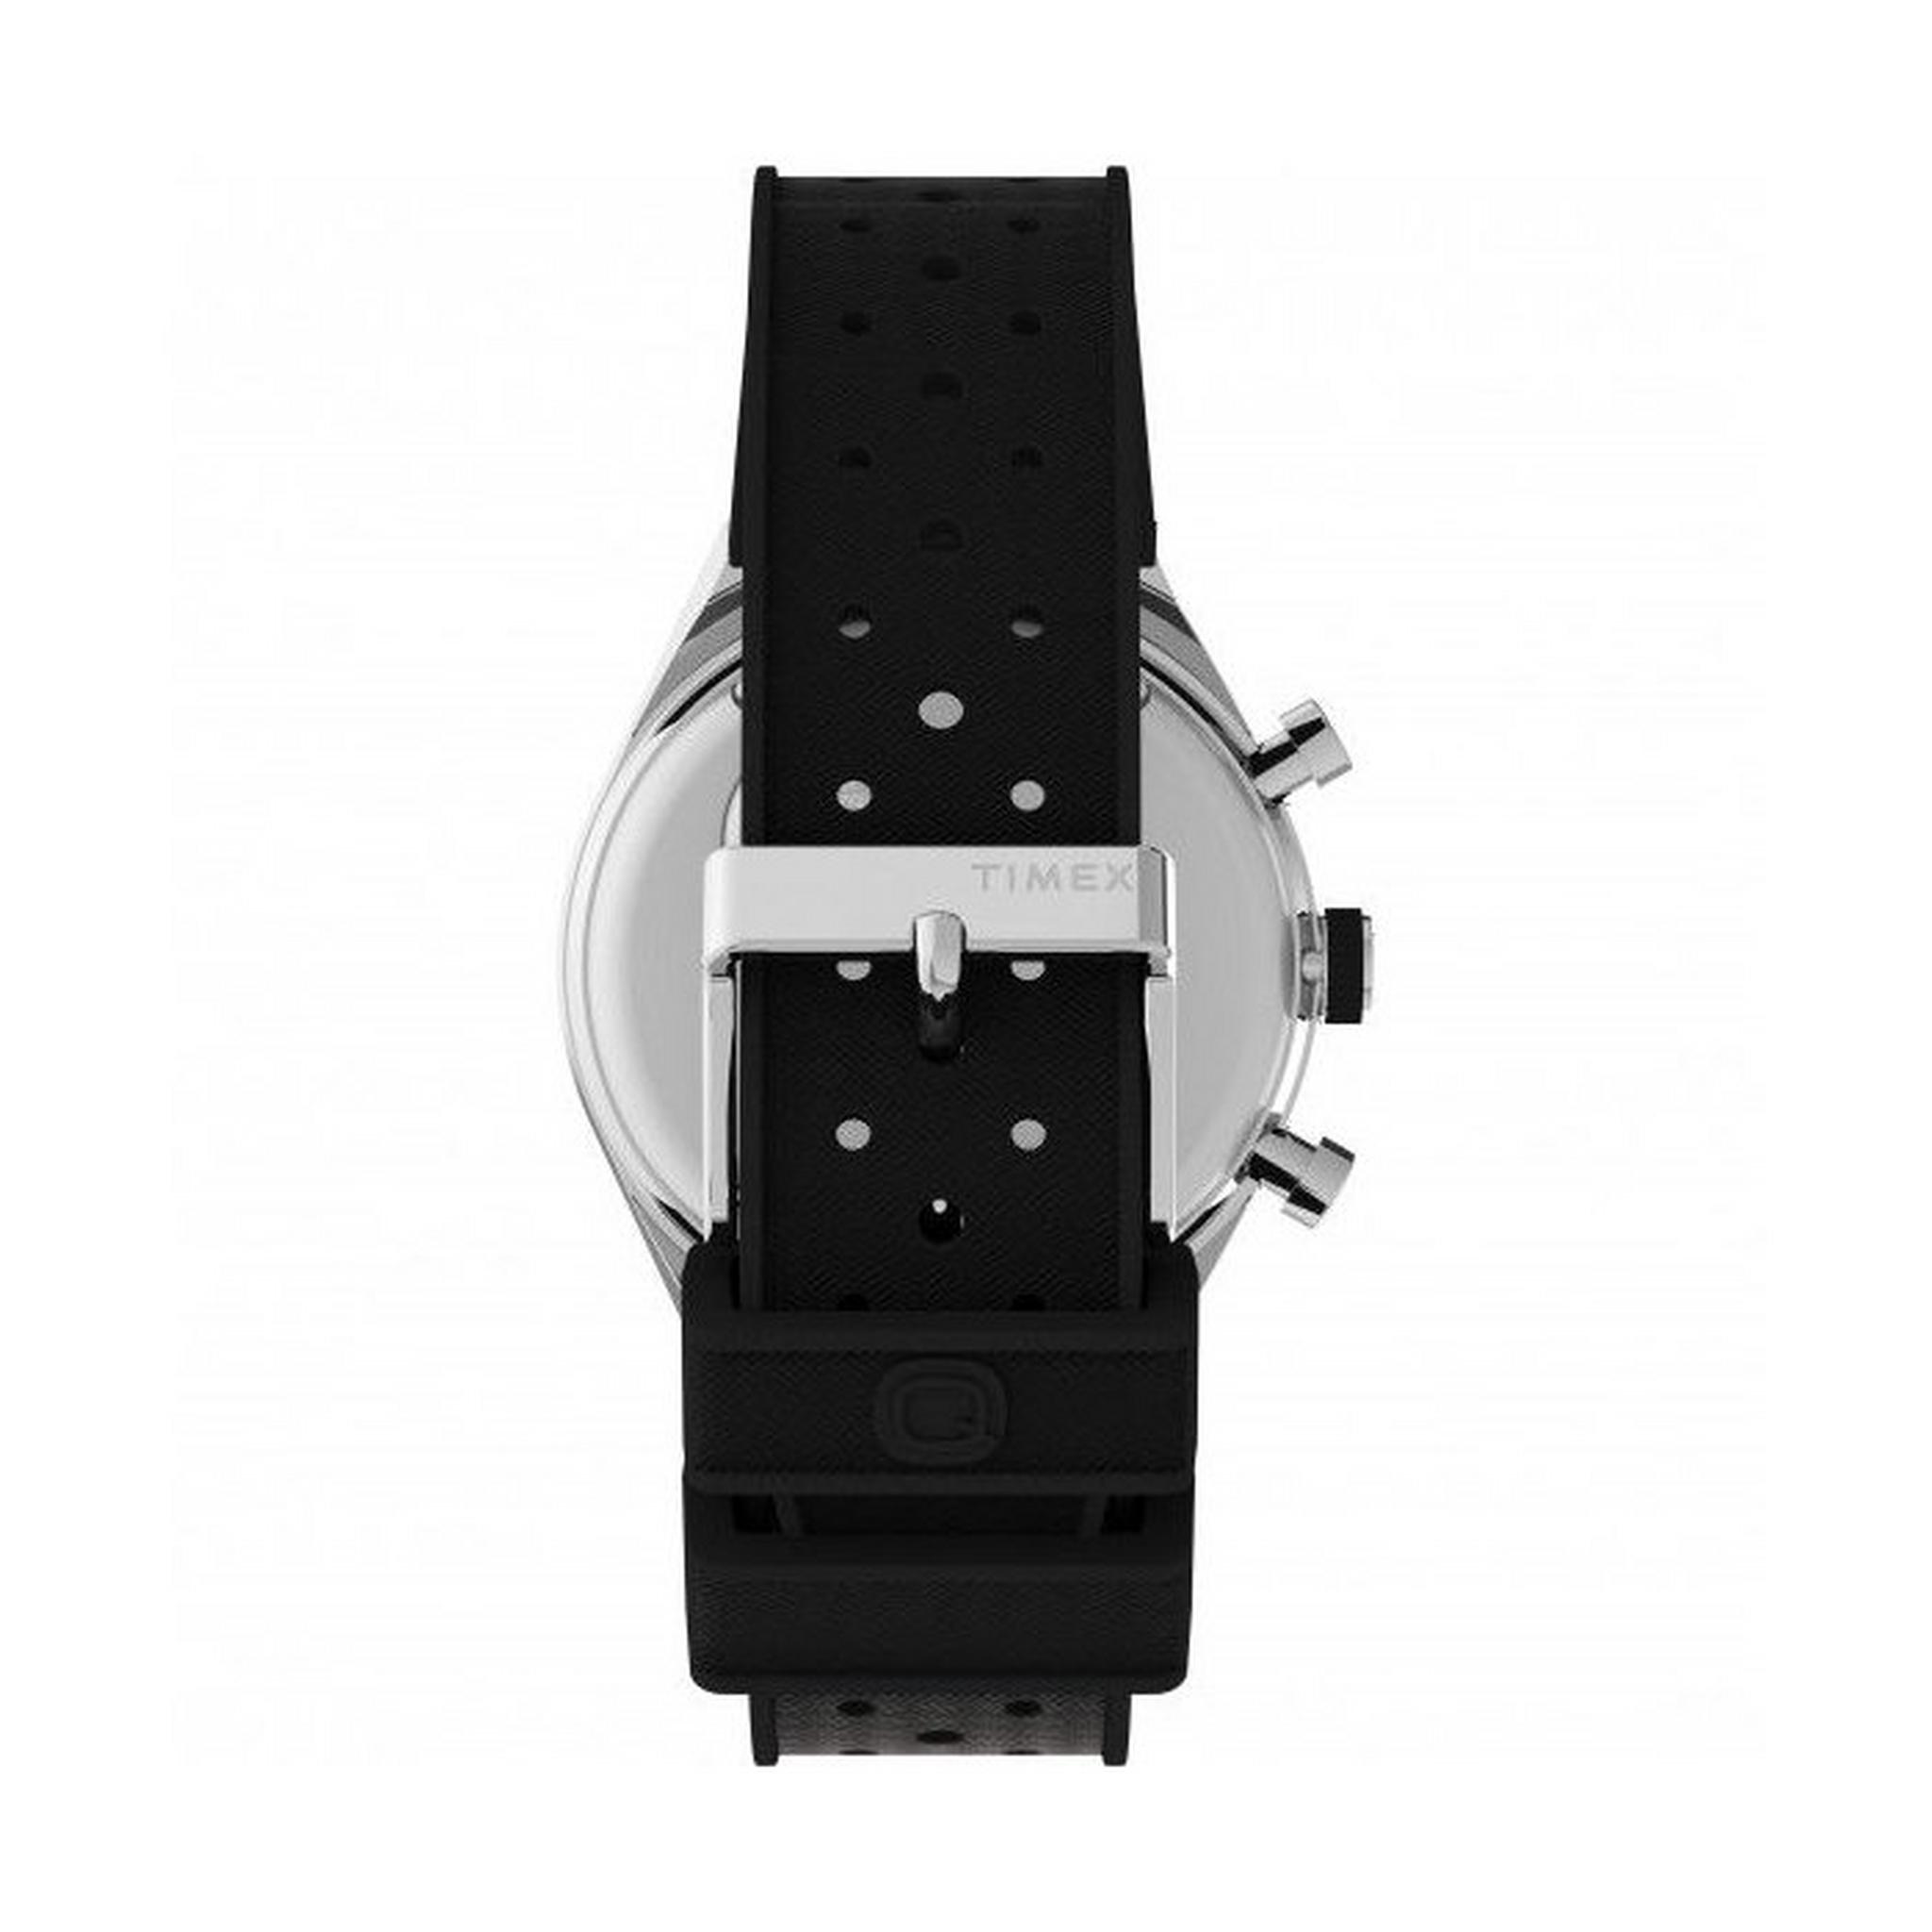 Timex Q Men's Watch, Chronograph, 40mm, Rubber Strap, TW2V70000 – Black